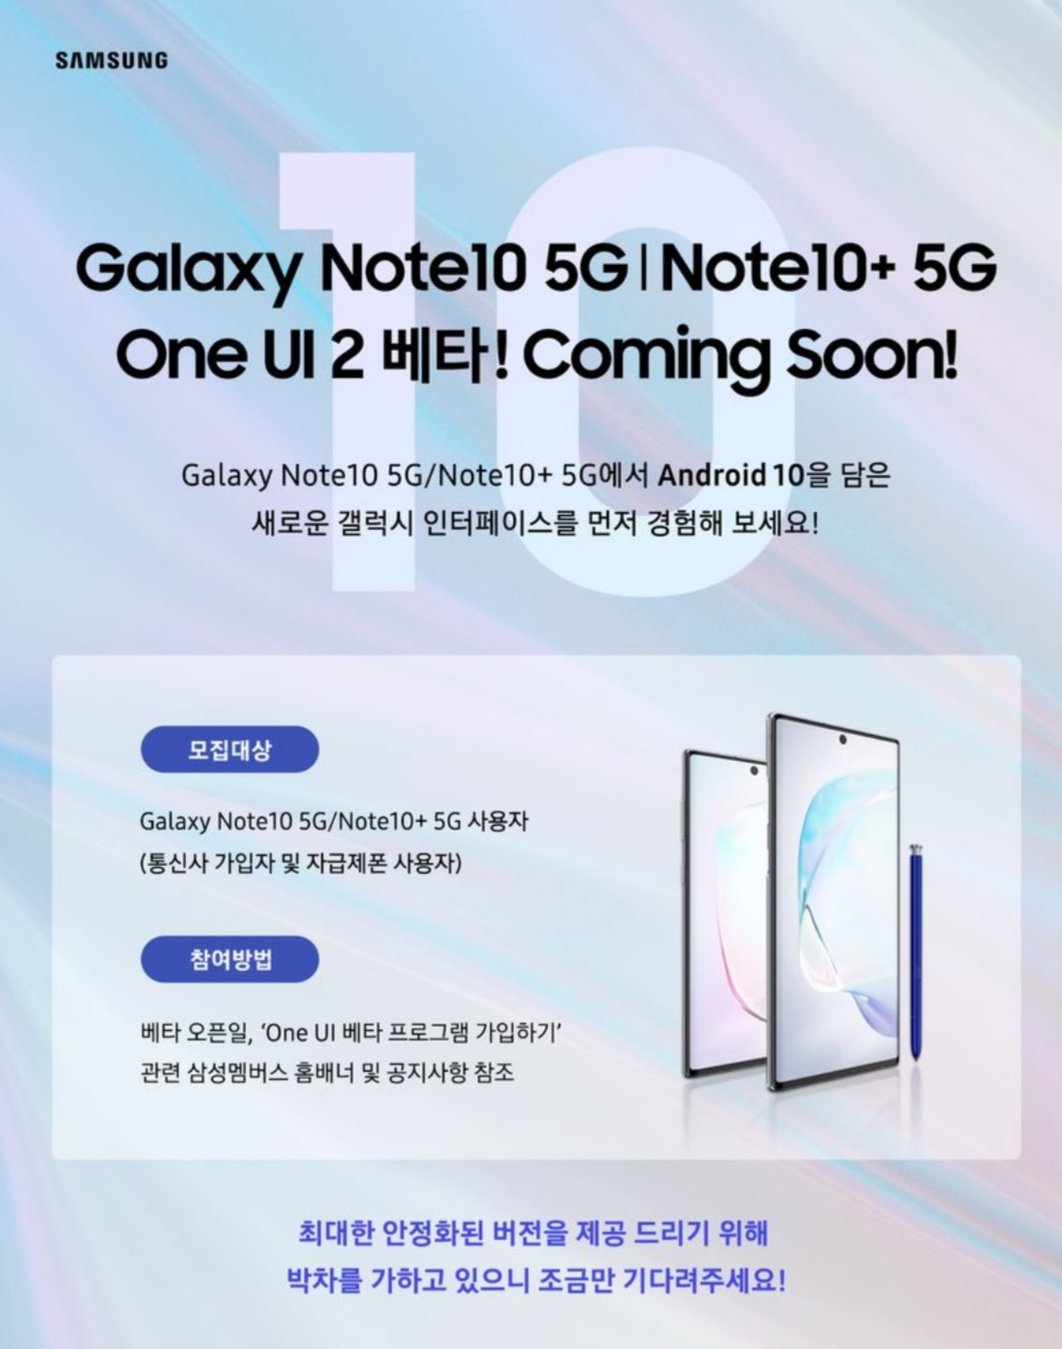 Galaxy Note 10 Beta Program